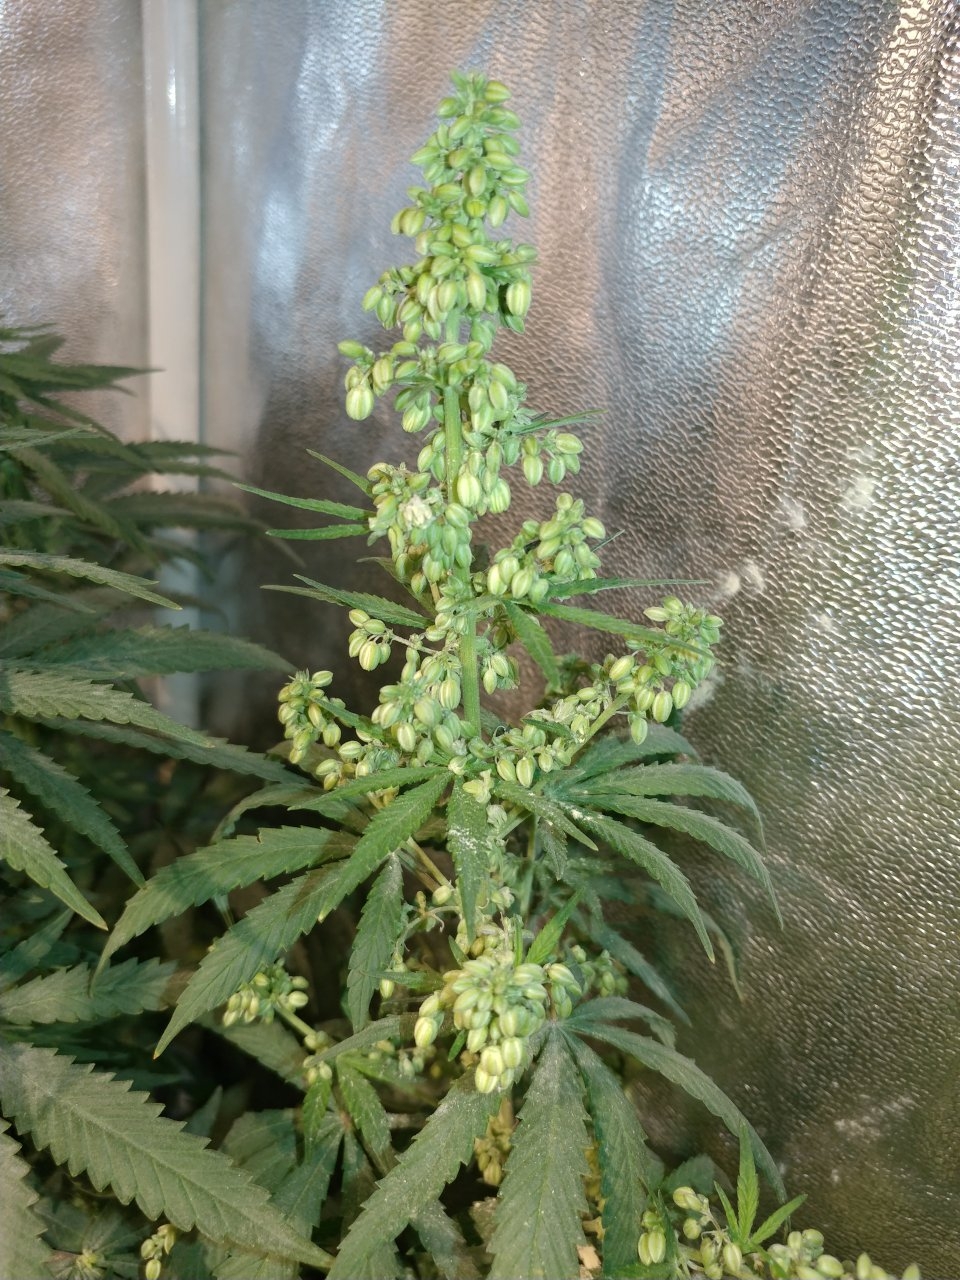 Icemud_bangi haze_cannabis_seed_grow_led grow light (11).jpg